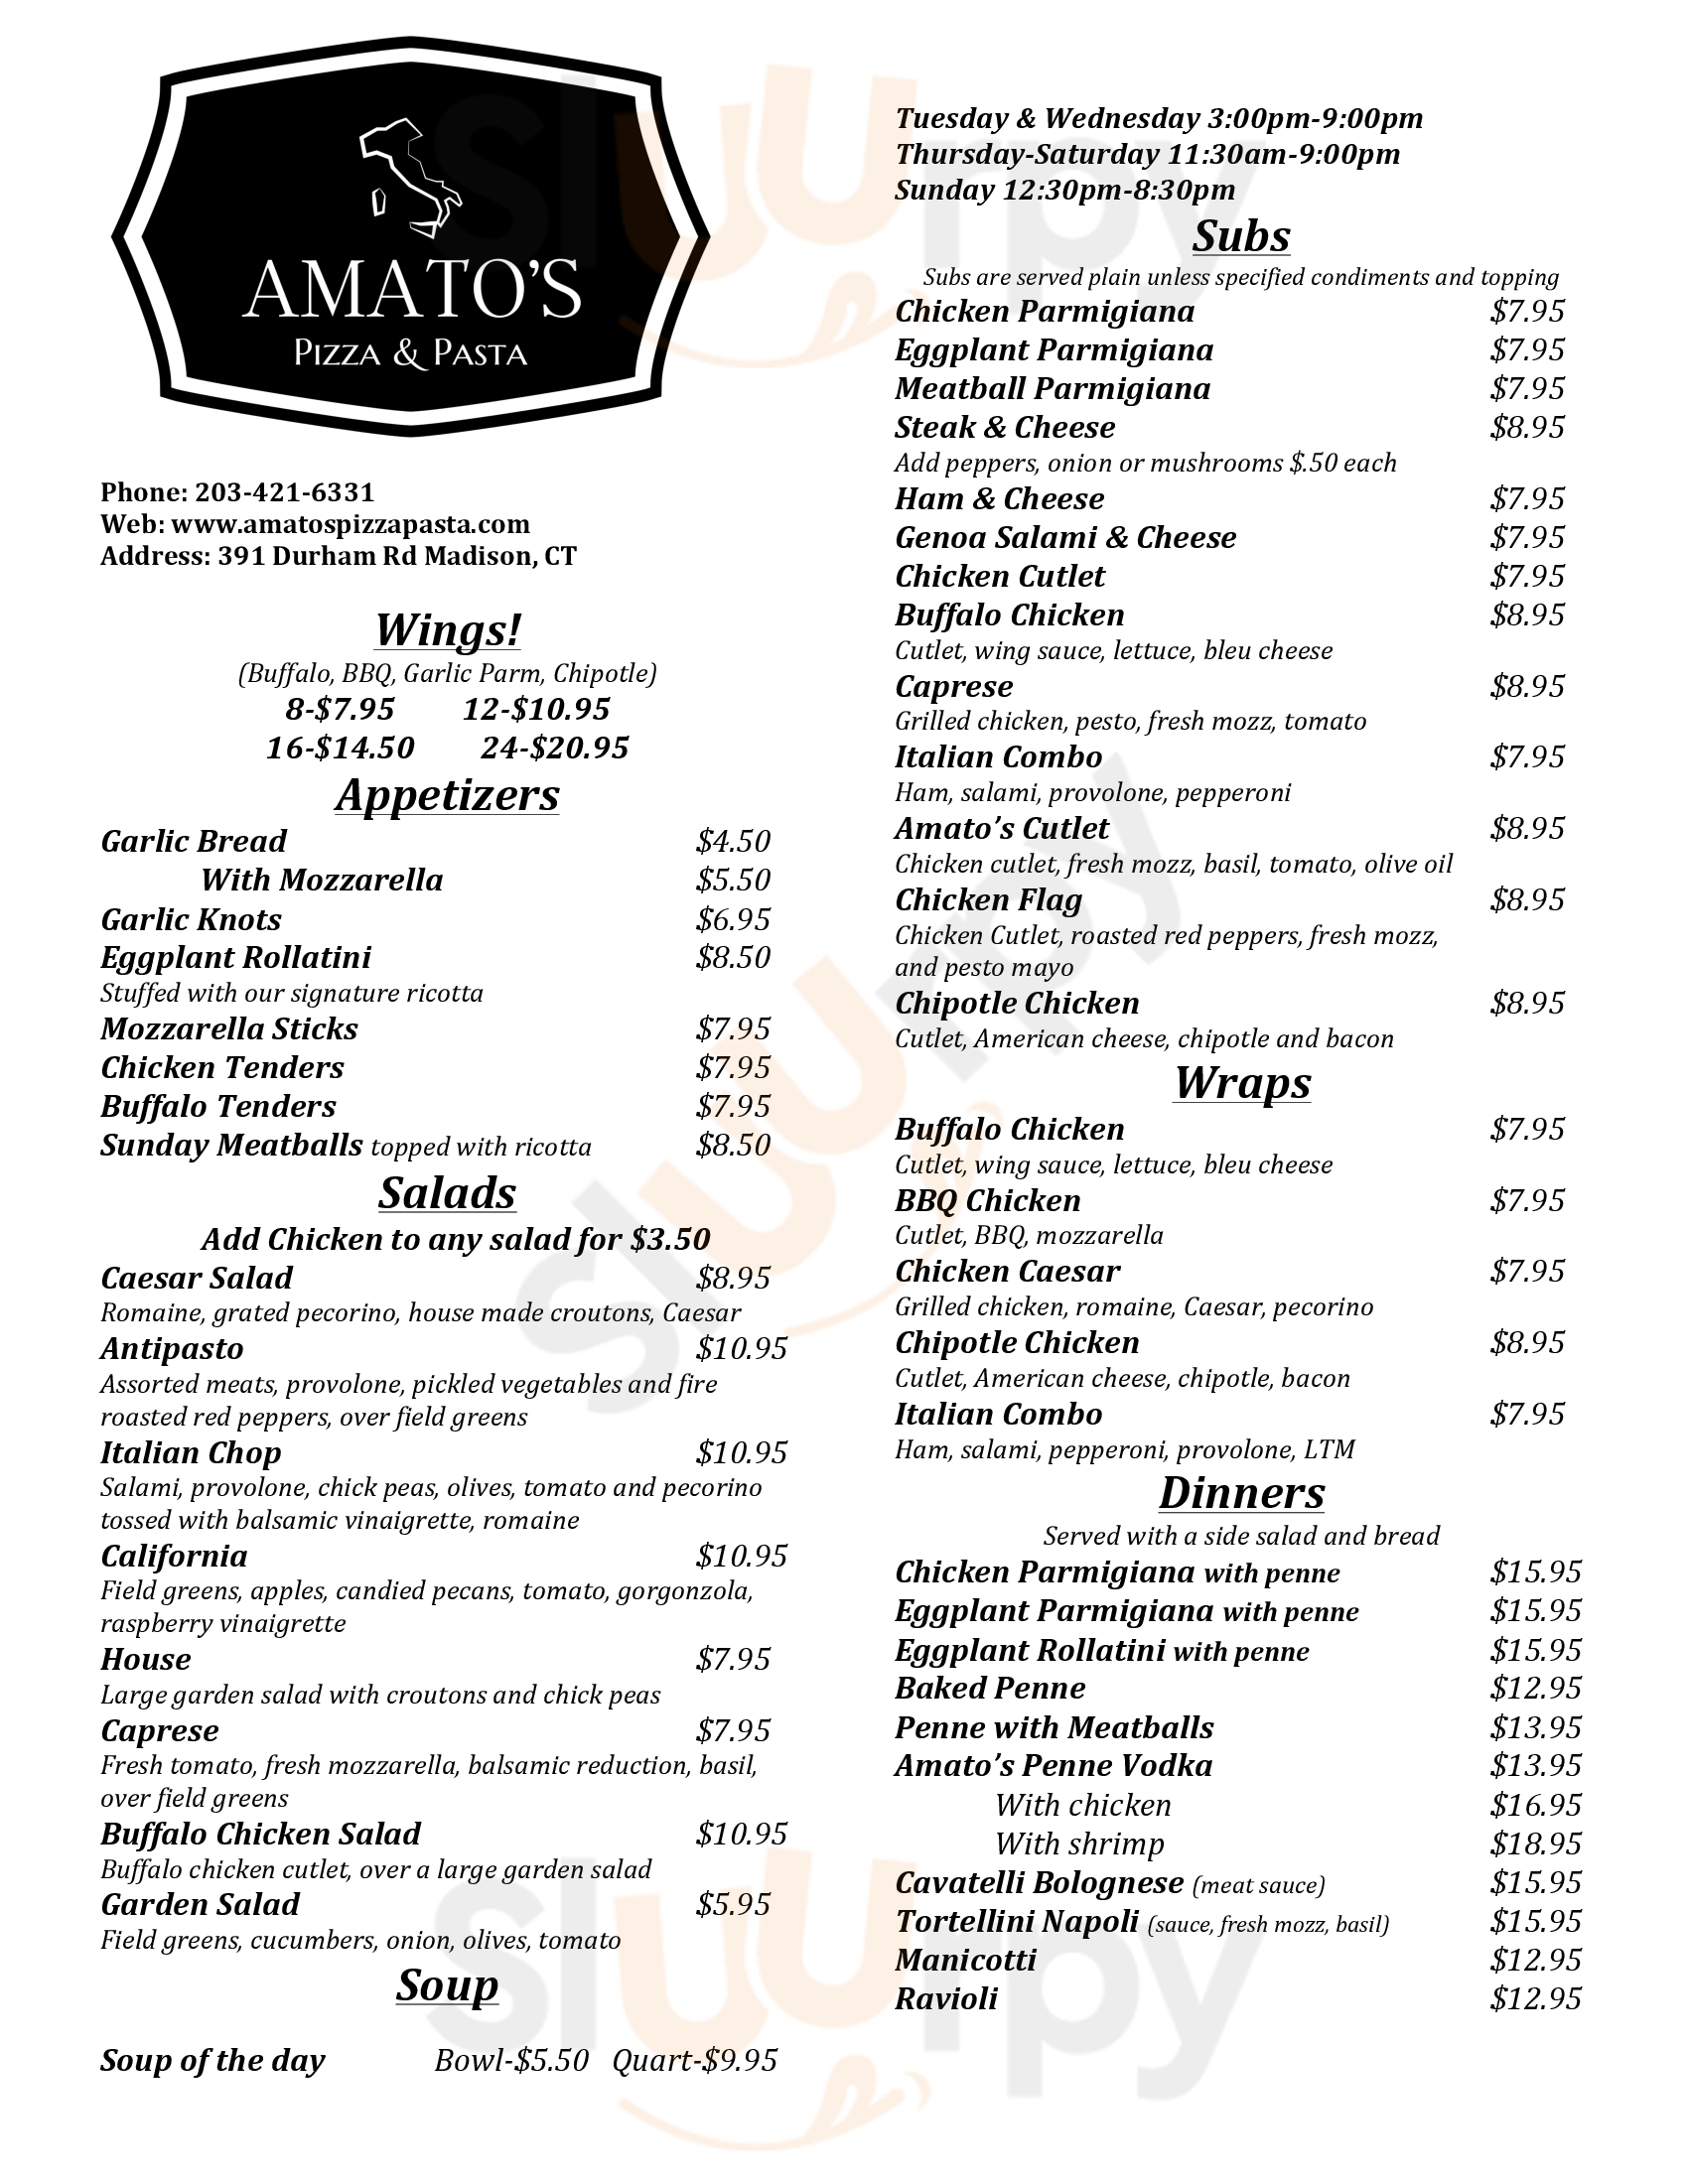 Amato's Pizza & Pasta Madison Menu - 1